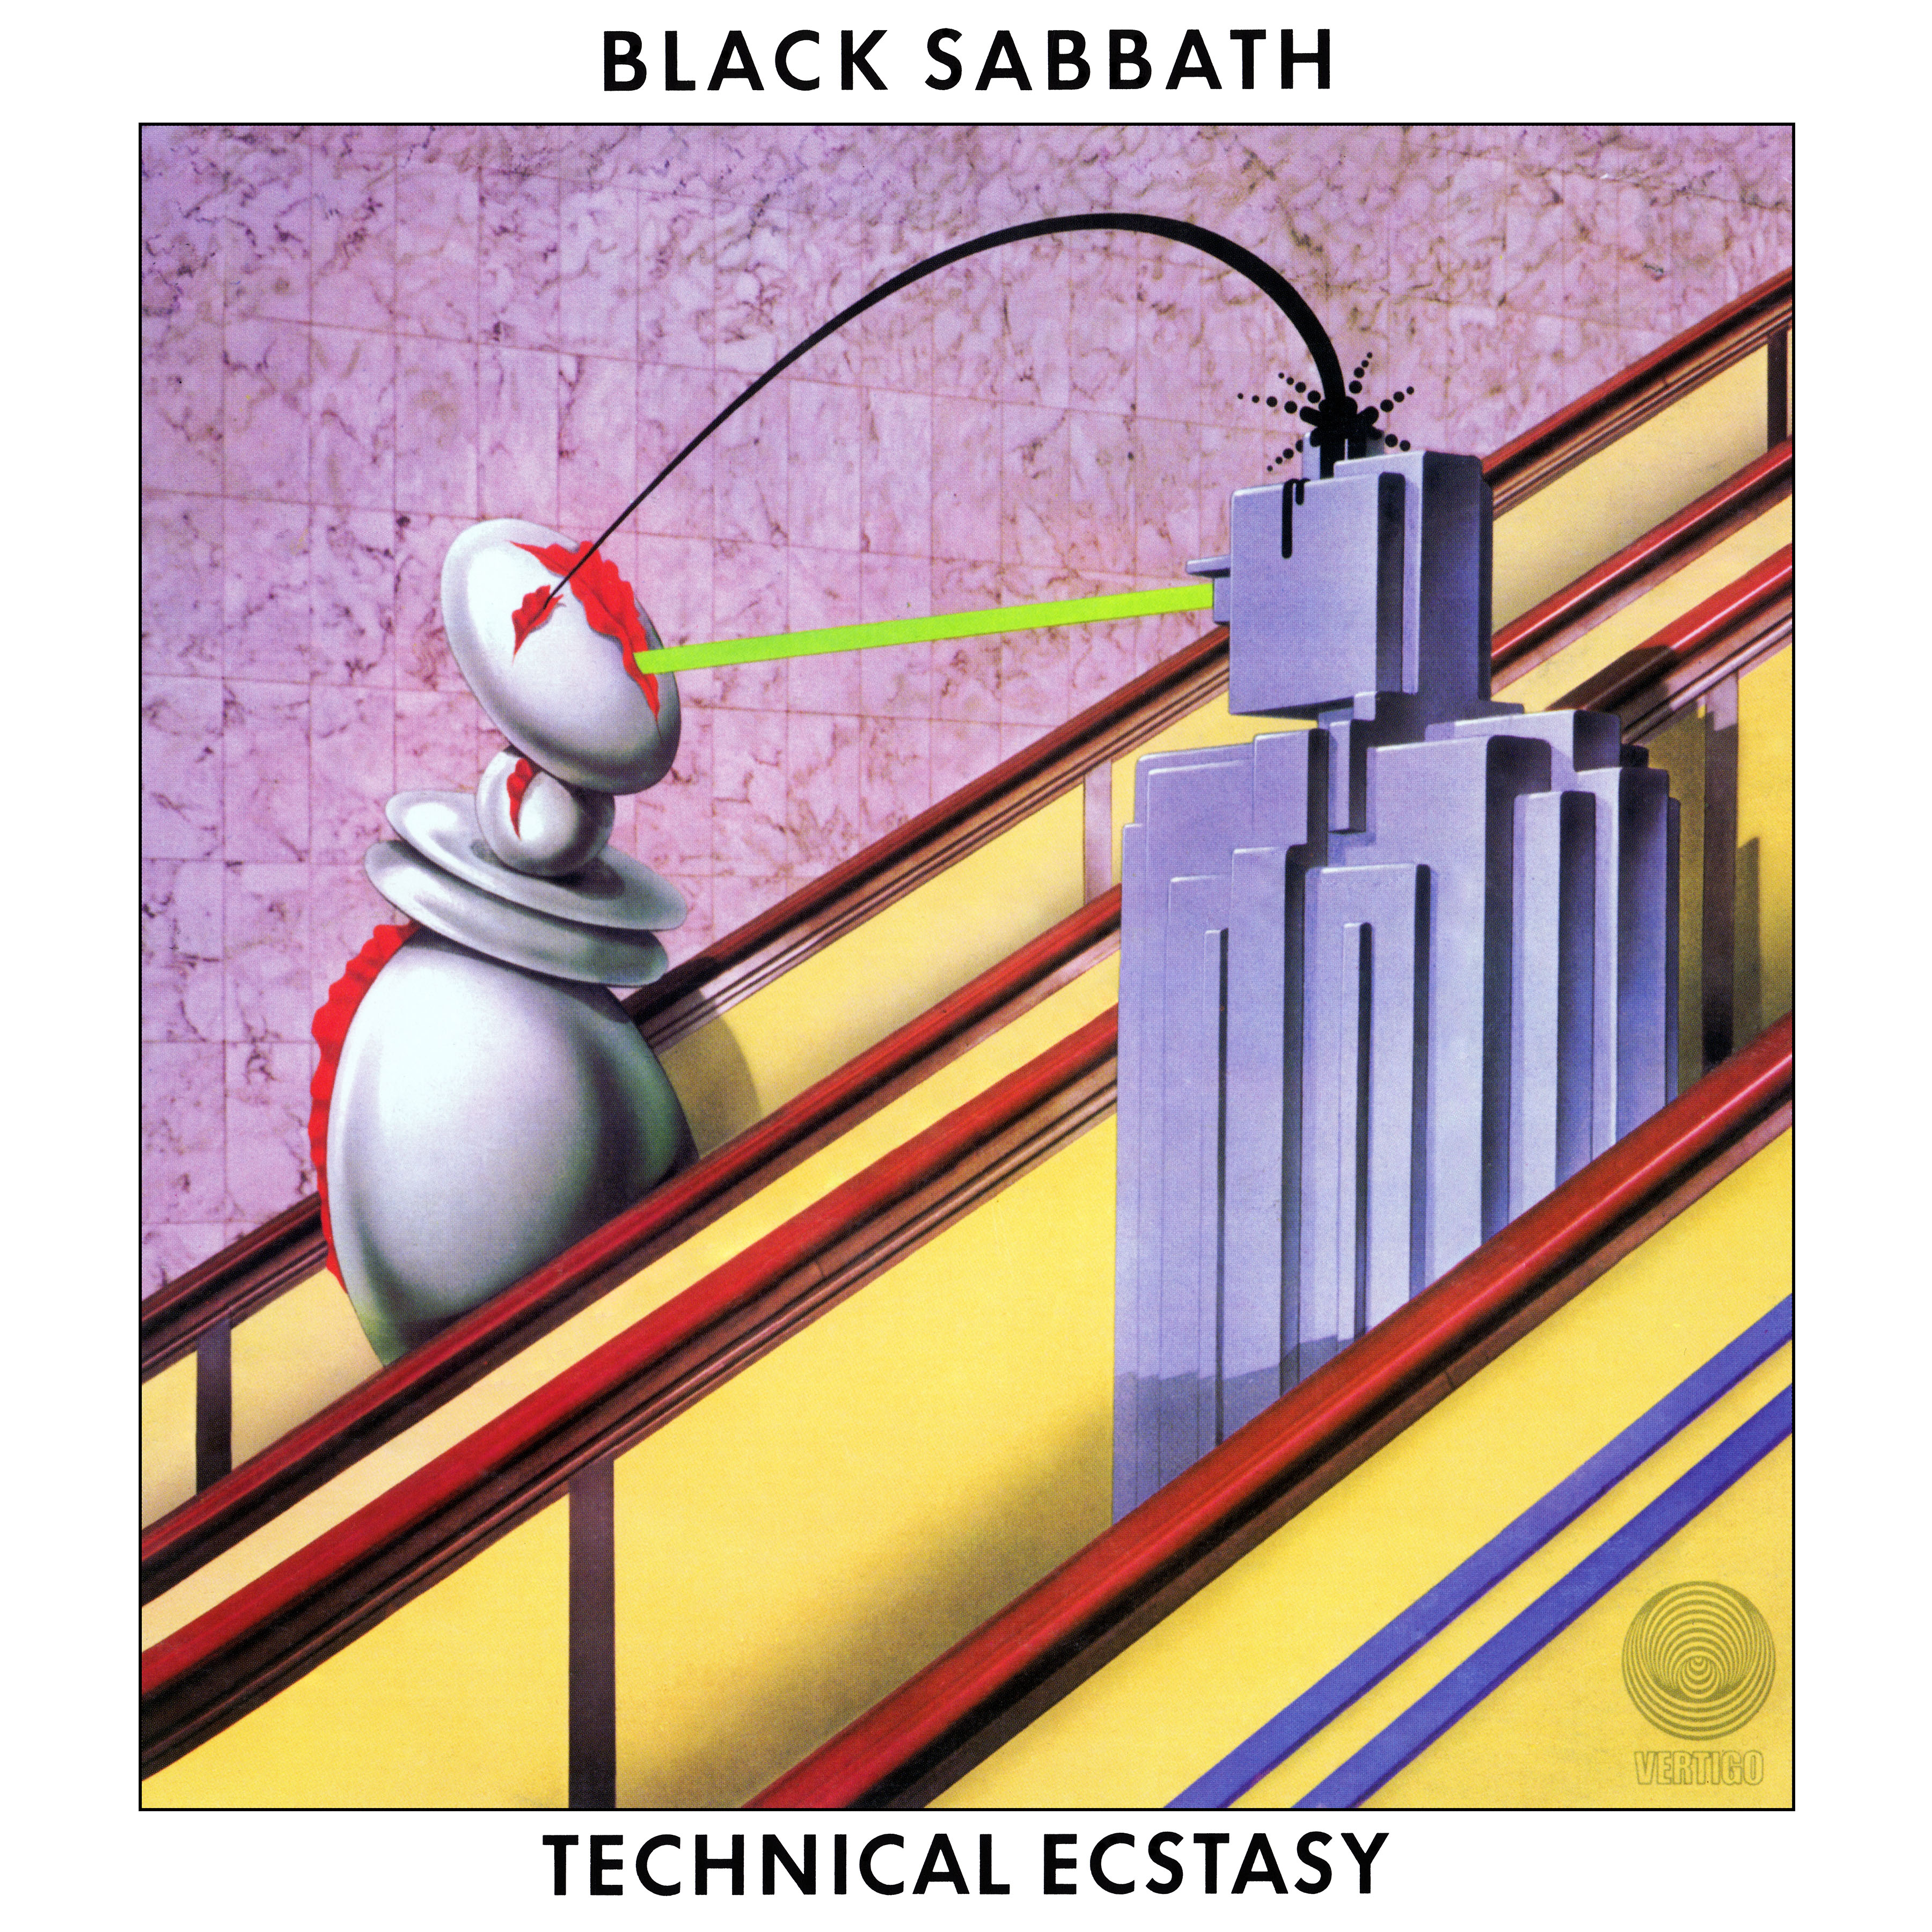 The Wizard (Black Sabbath song) - Wikipedia